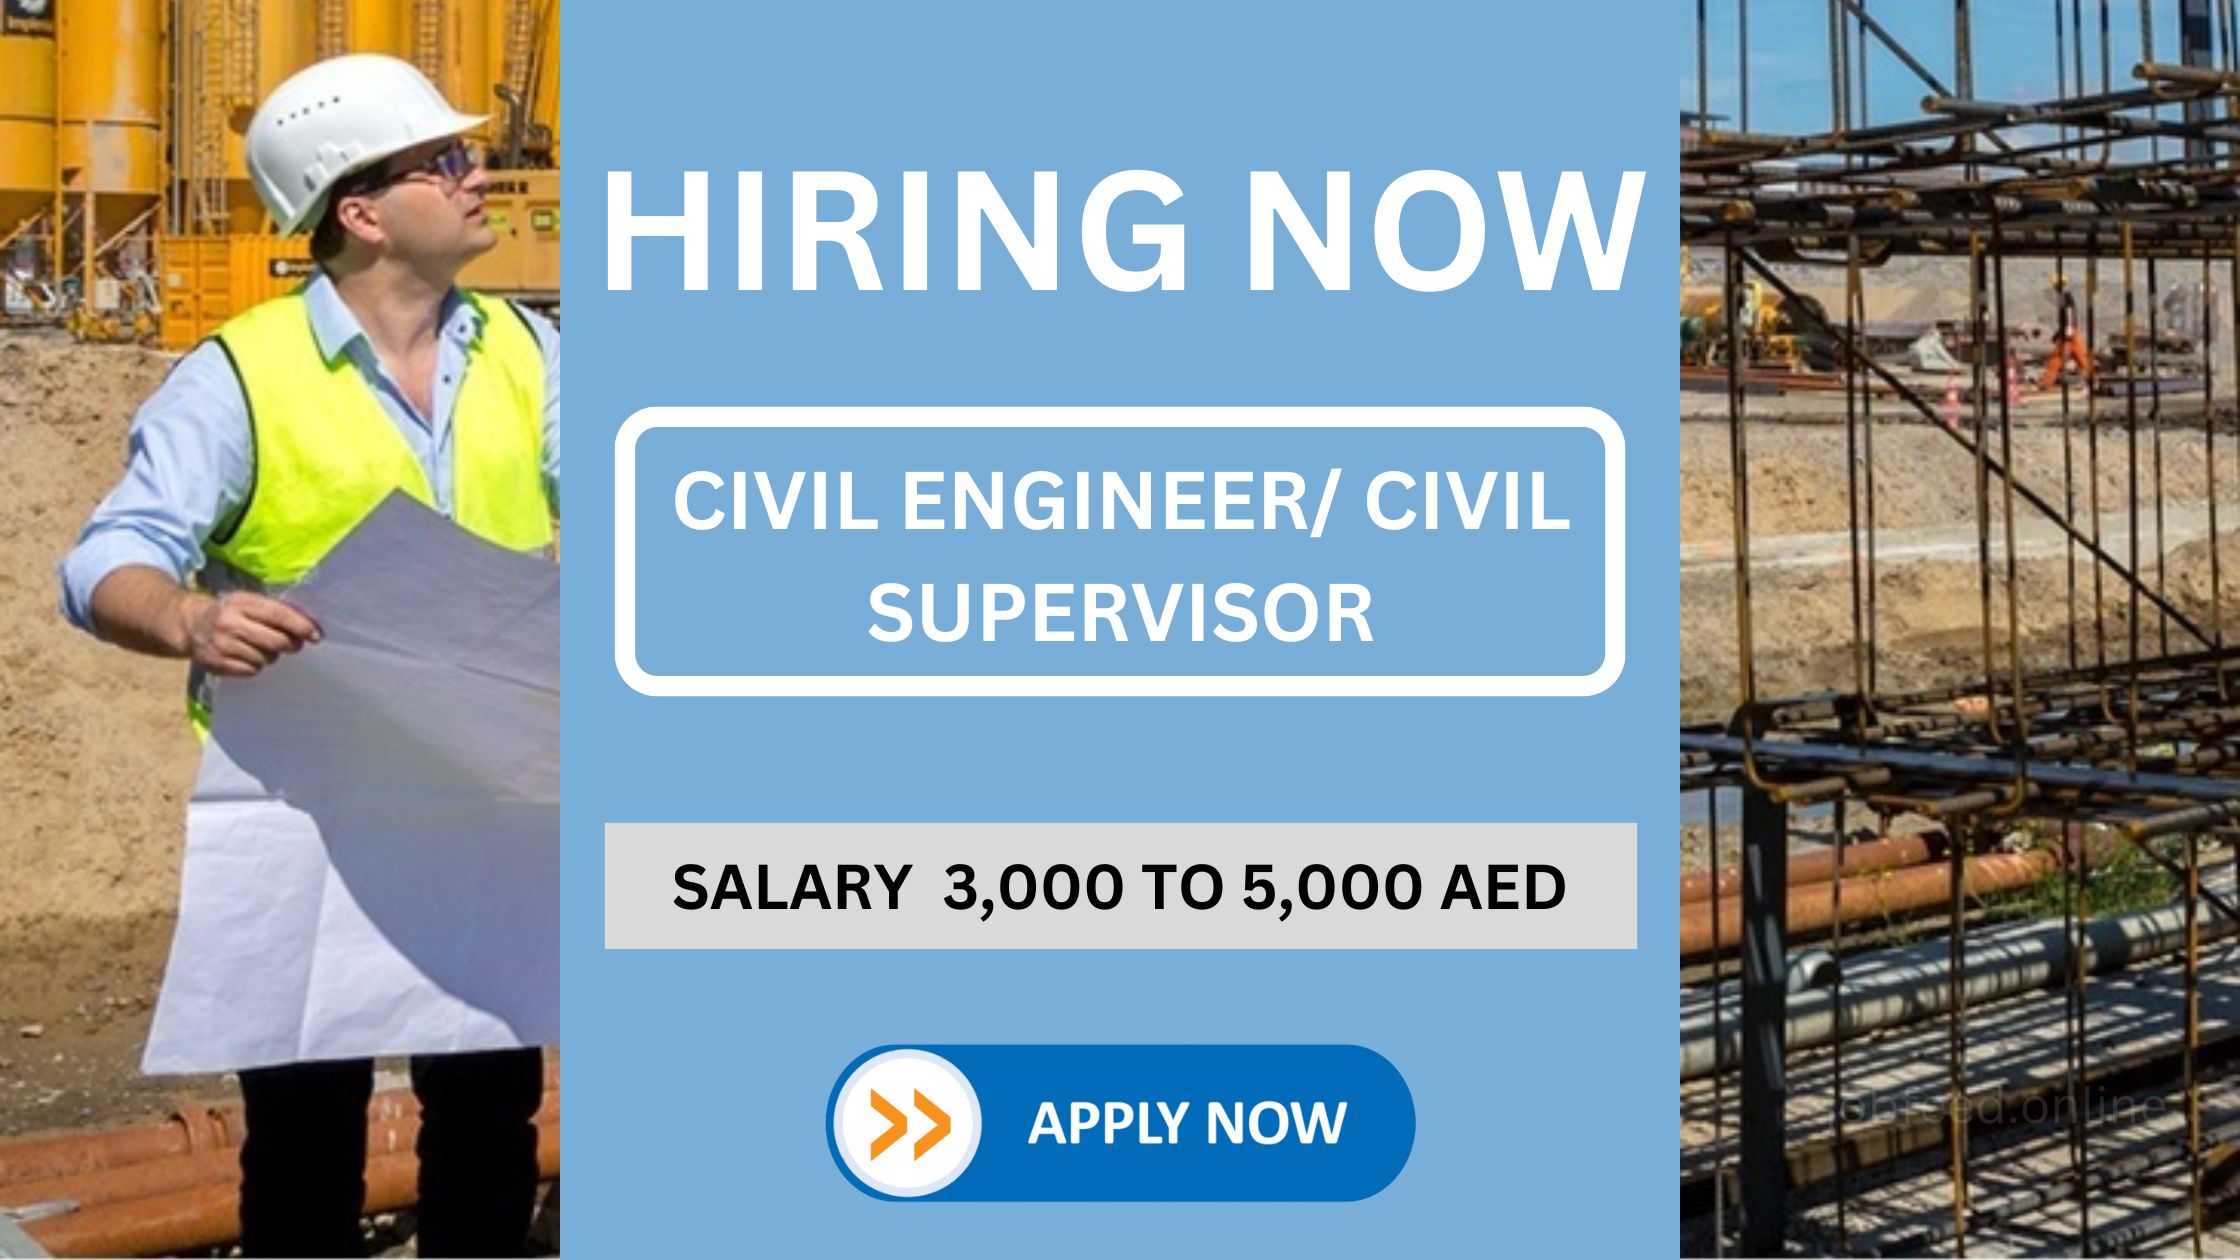 Civil Engineer/ Civil Supervisor Required for Immediate Hiring in Dubai